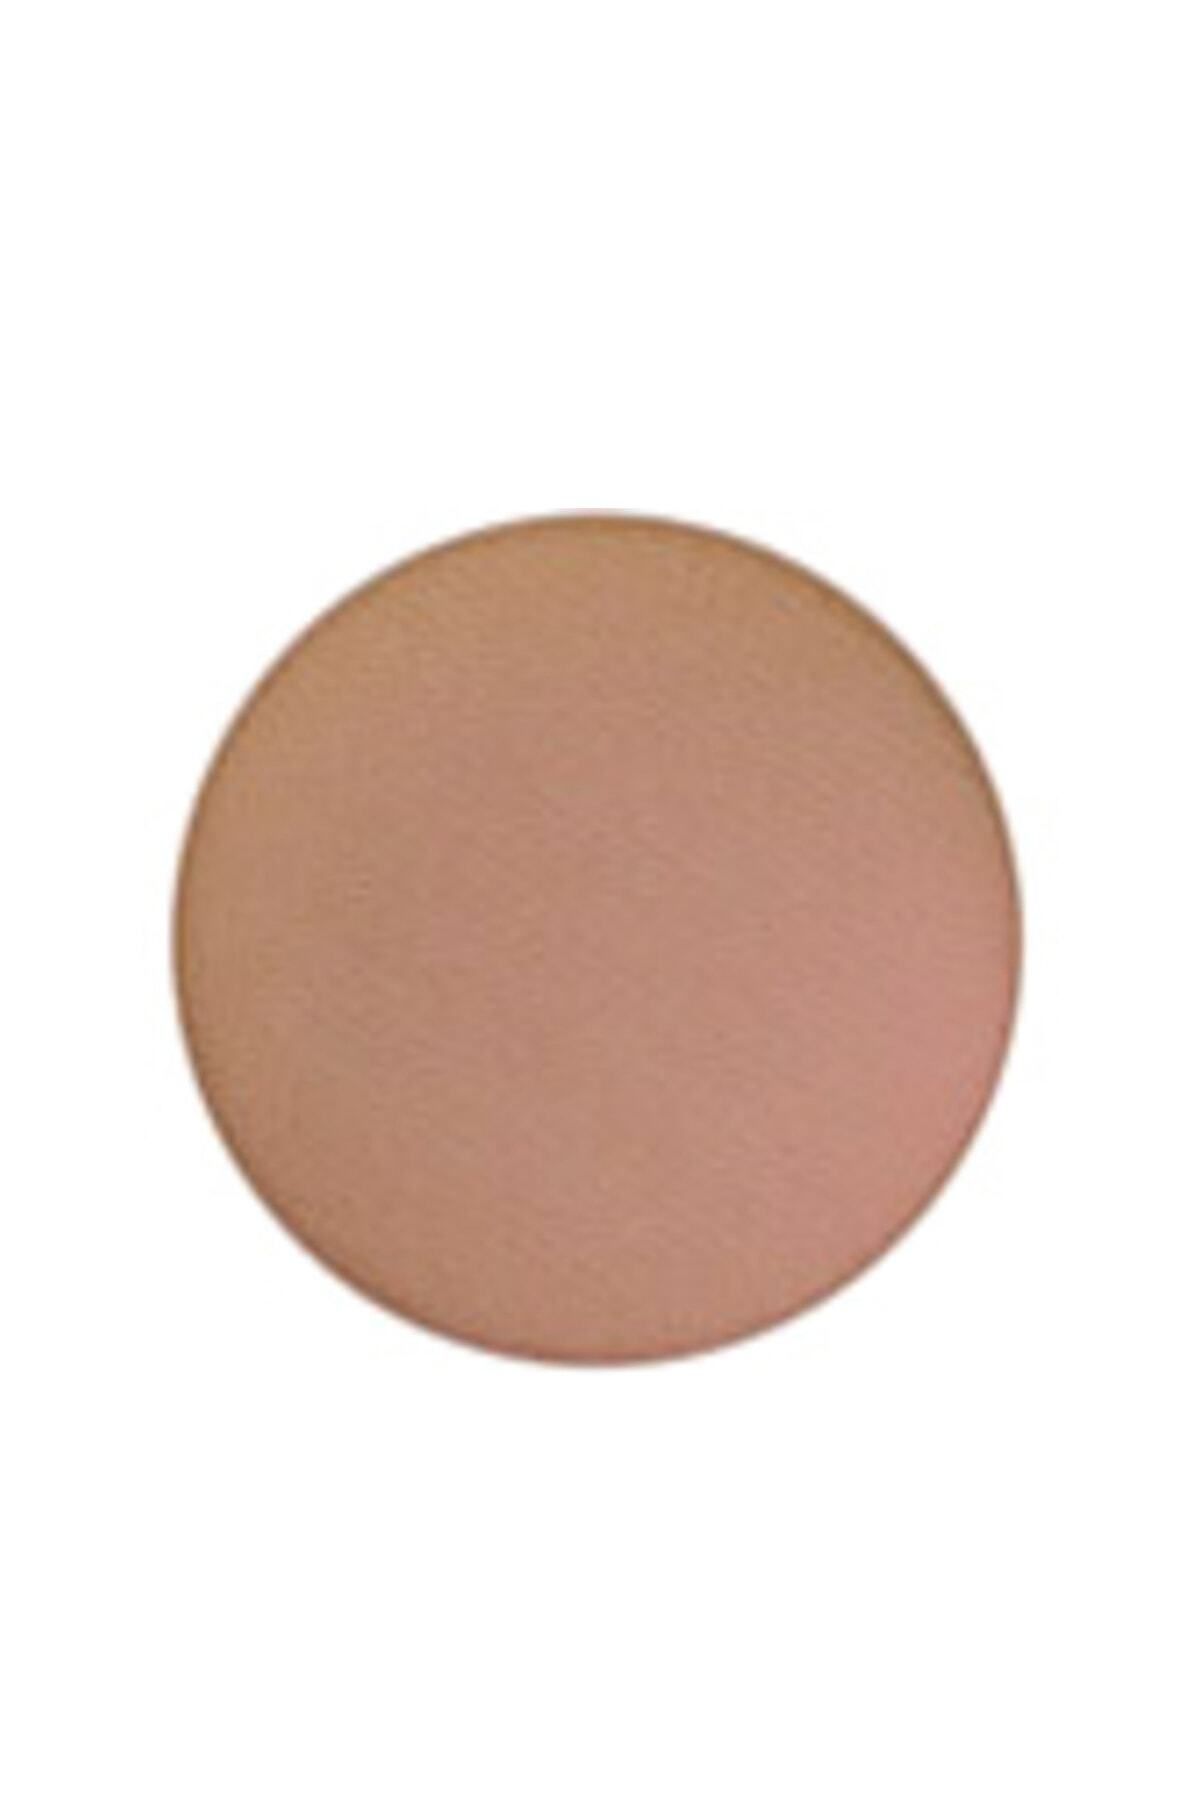 Mac Mac - Refill Far Cork Eye Shadow - 1.5 g Skin124